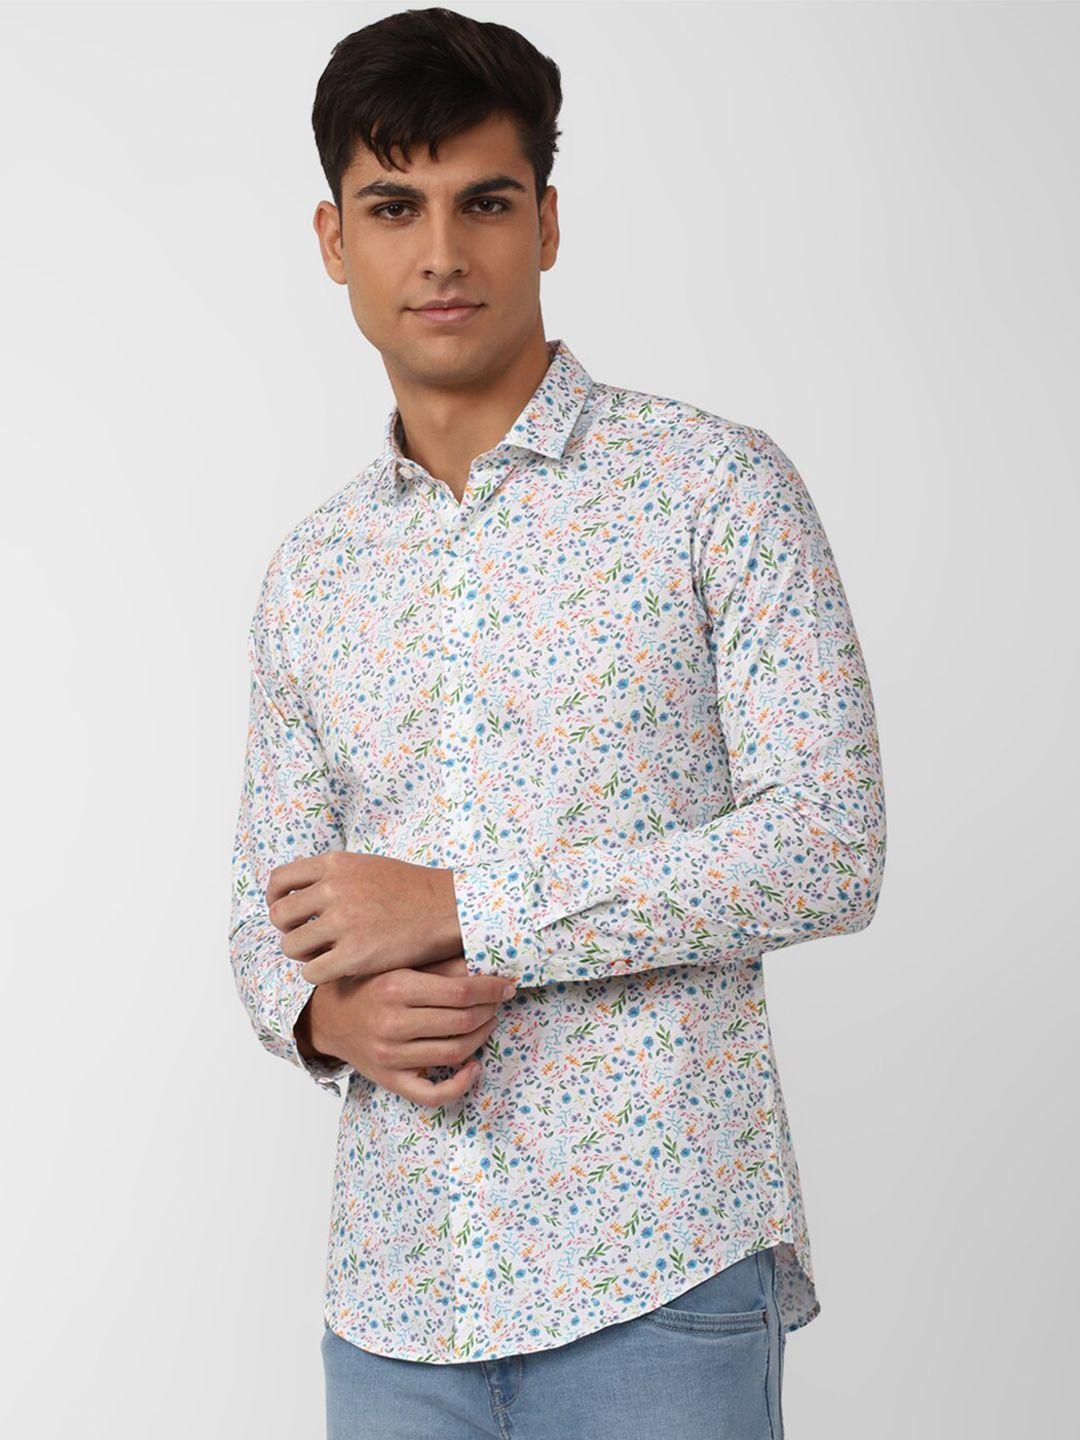 simon carter london men cotton slim fit floral printed casual shirt